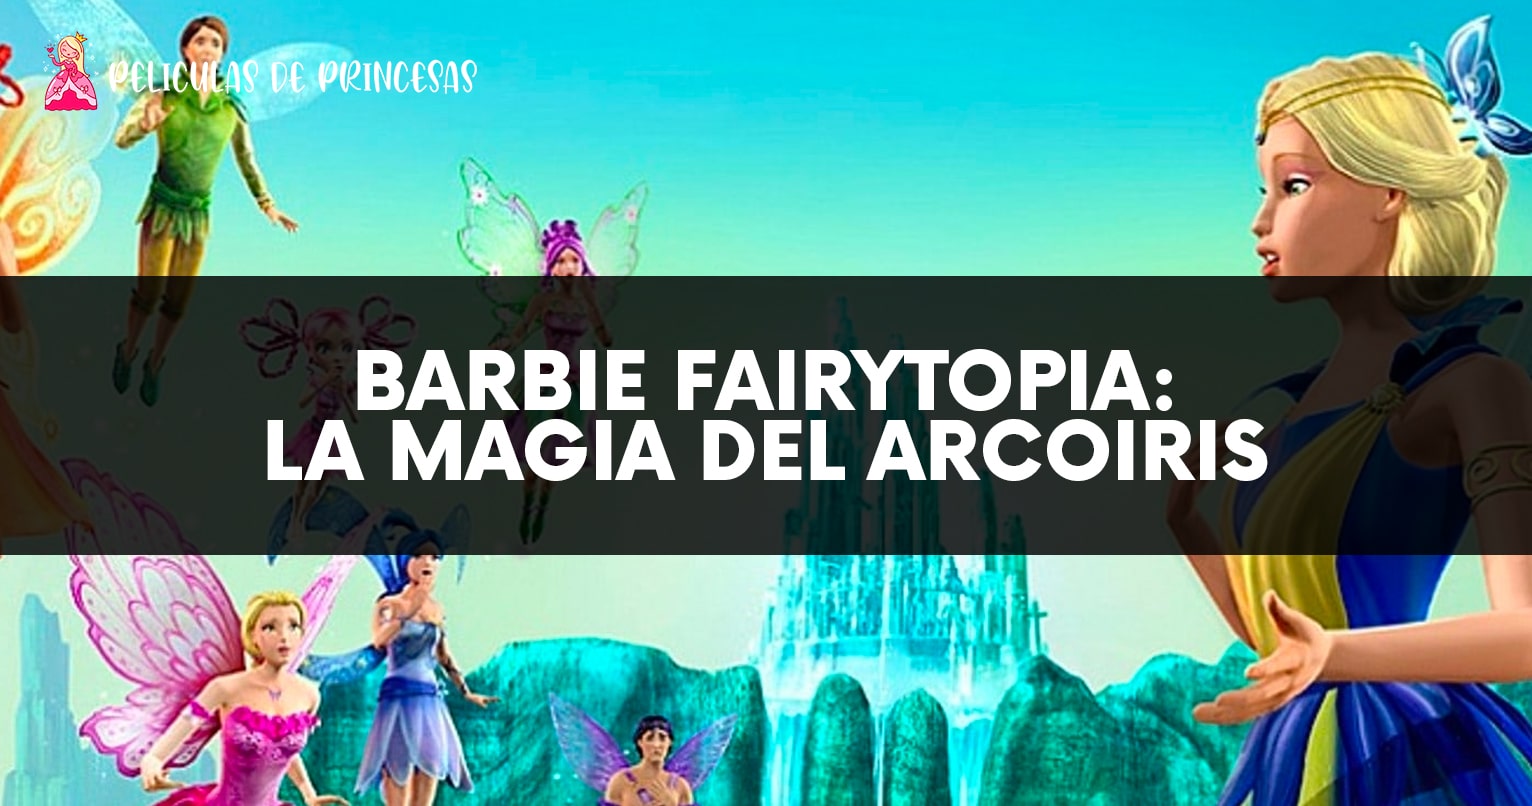 barbie fairytopia la magia del arcoiris